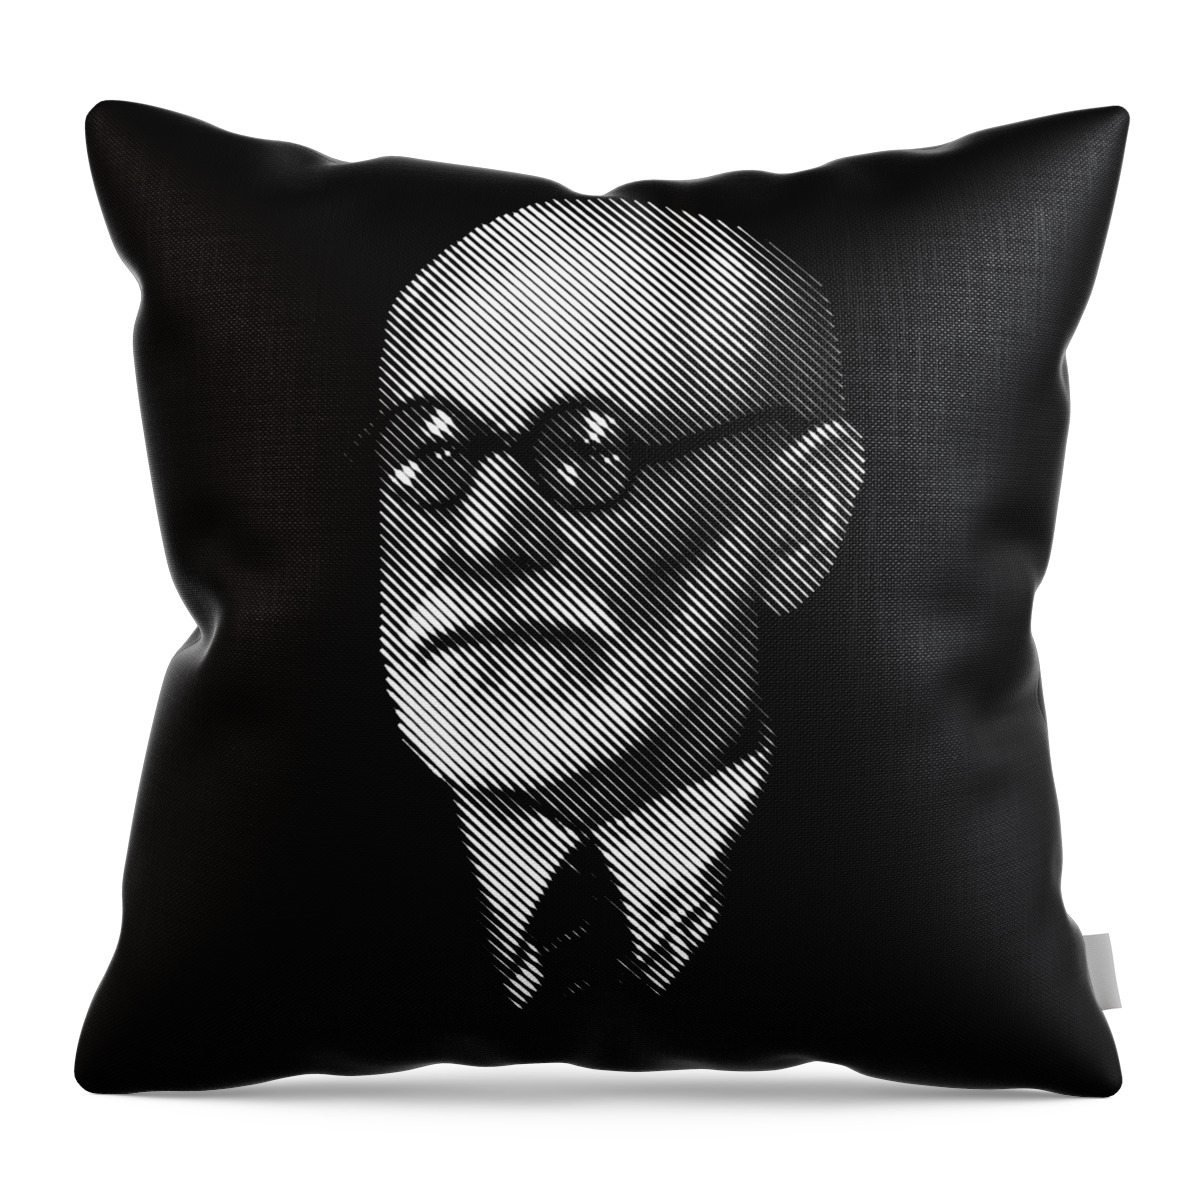  Father Of Psychoanalysis - Portrait Throw Pillow featuring the digital art portrait of Sigmund Freud by Cu Biz